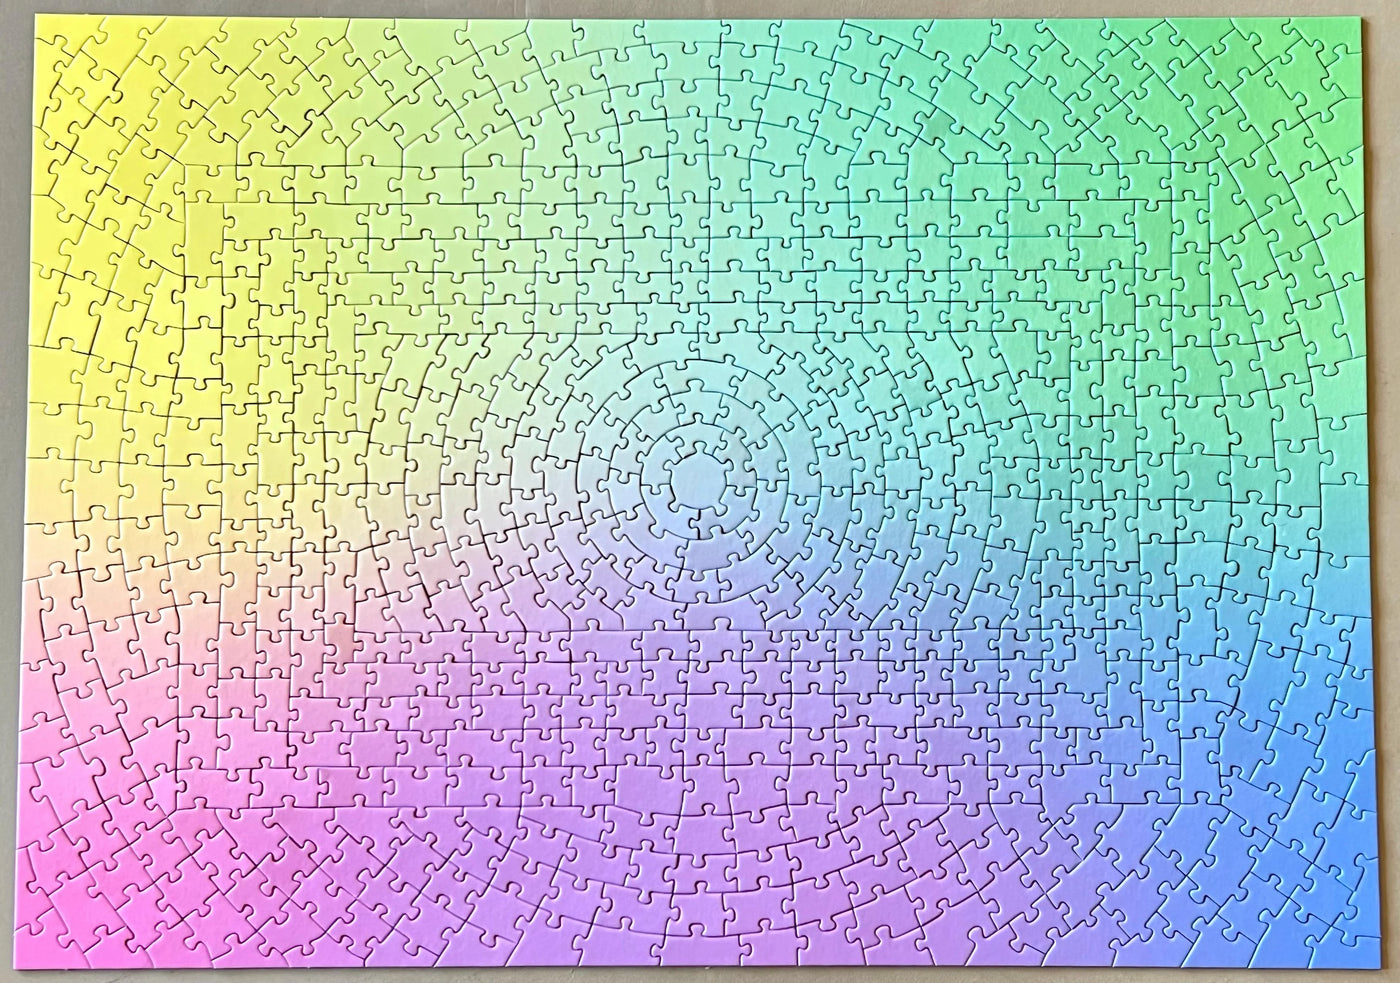 Krypt Gradient-631 Piece Jigsaw Puzzle